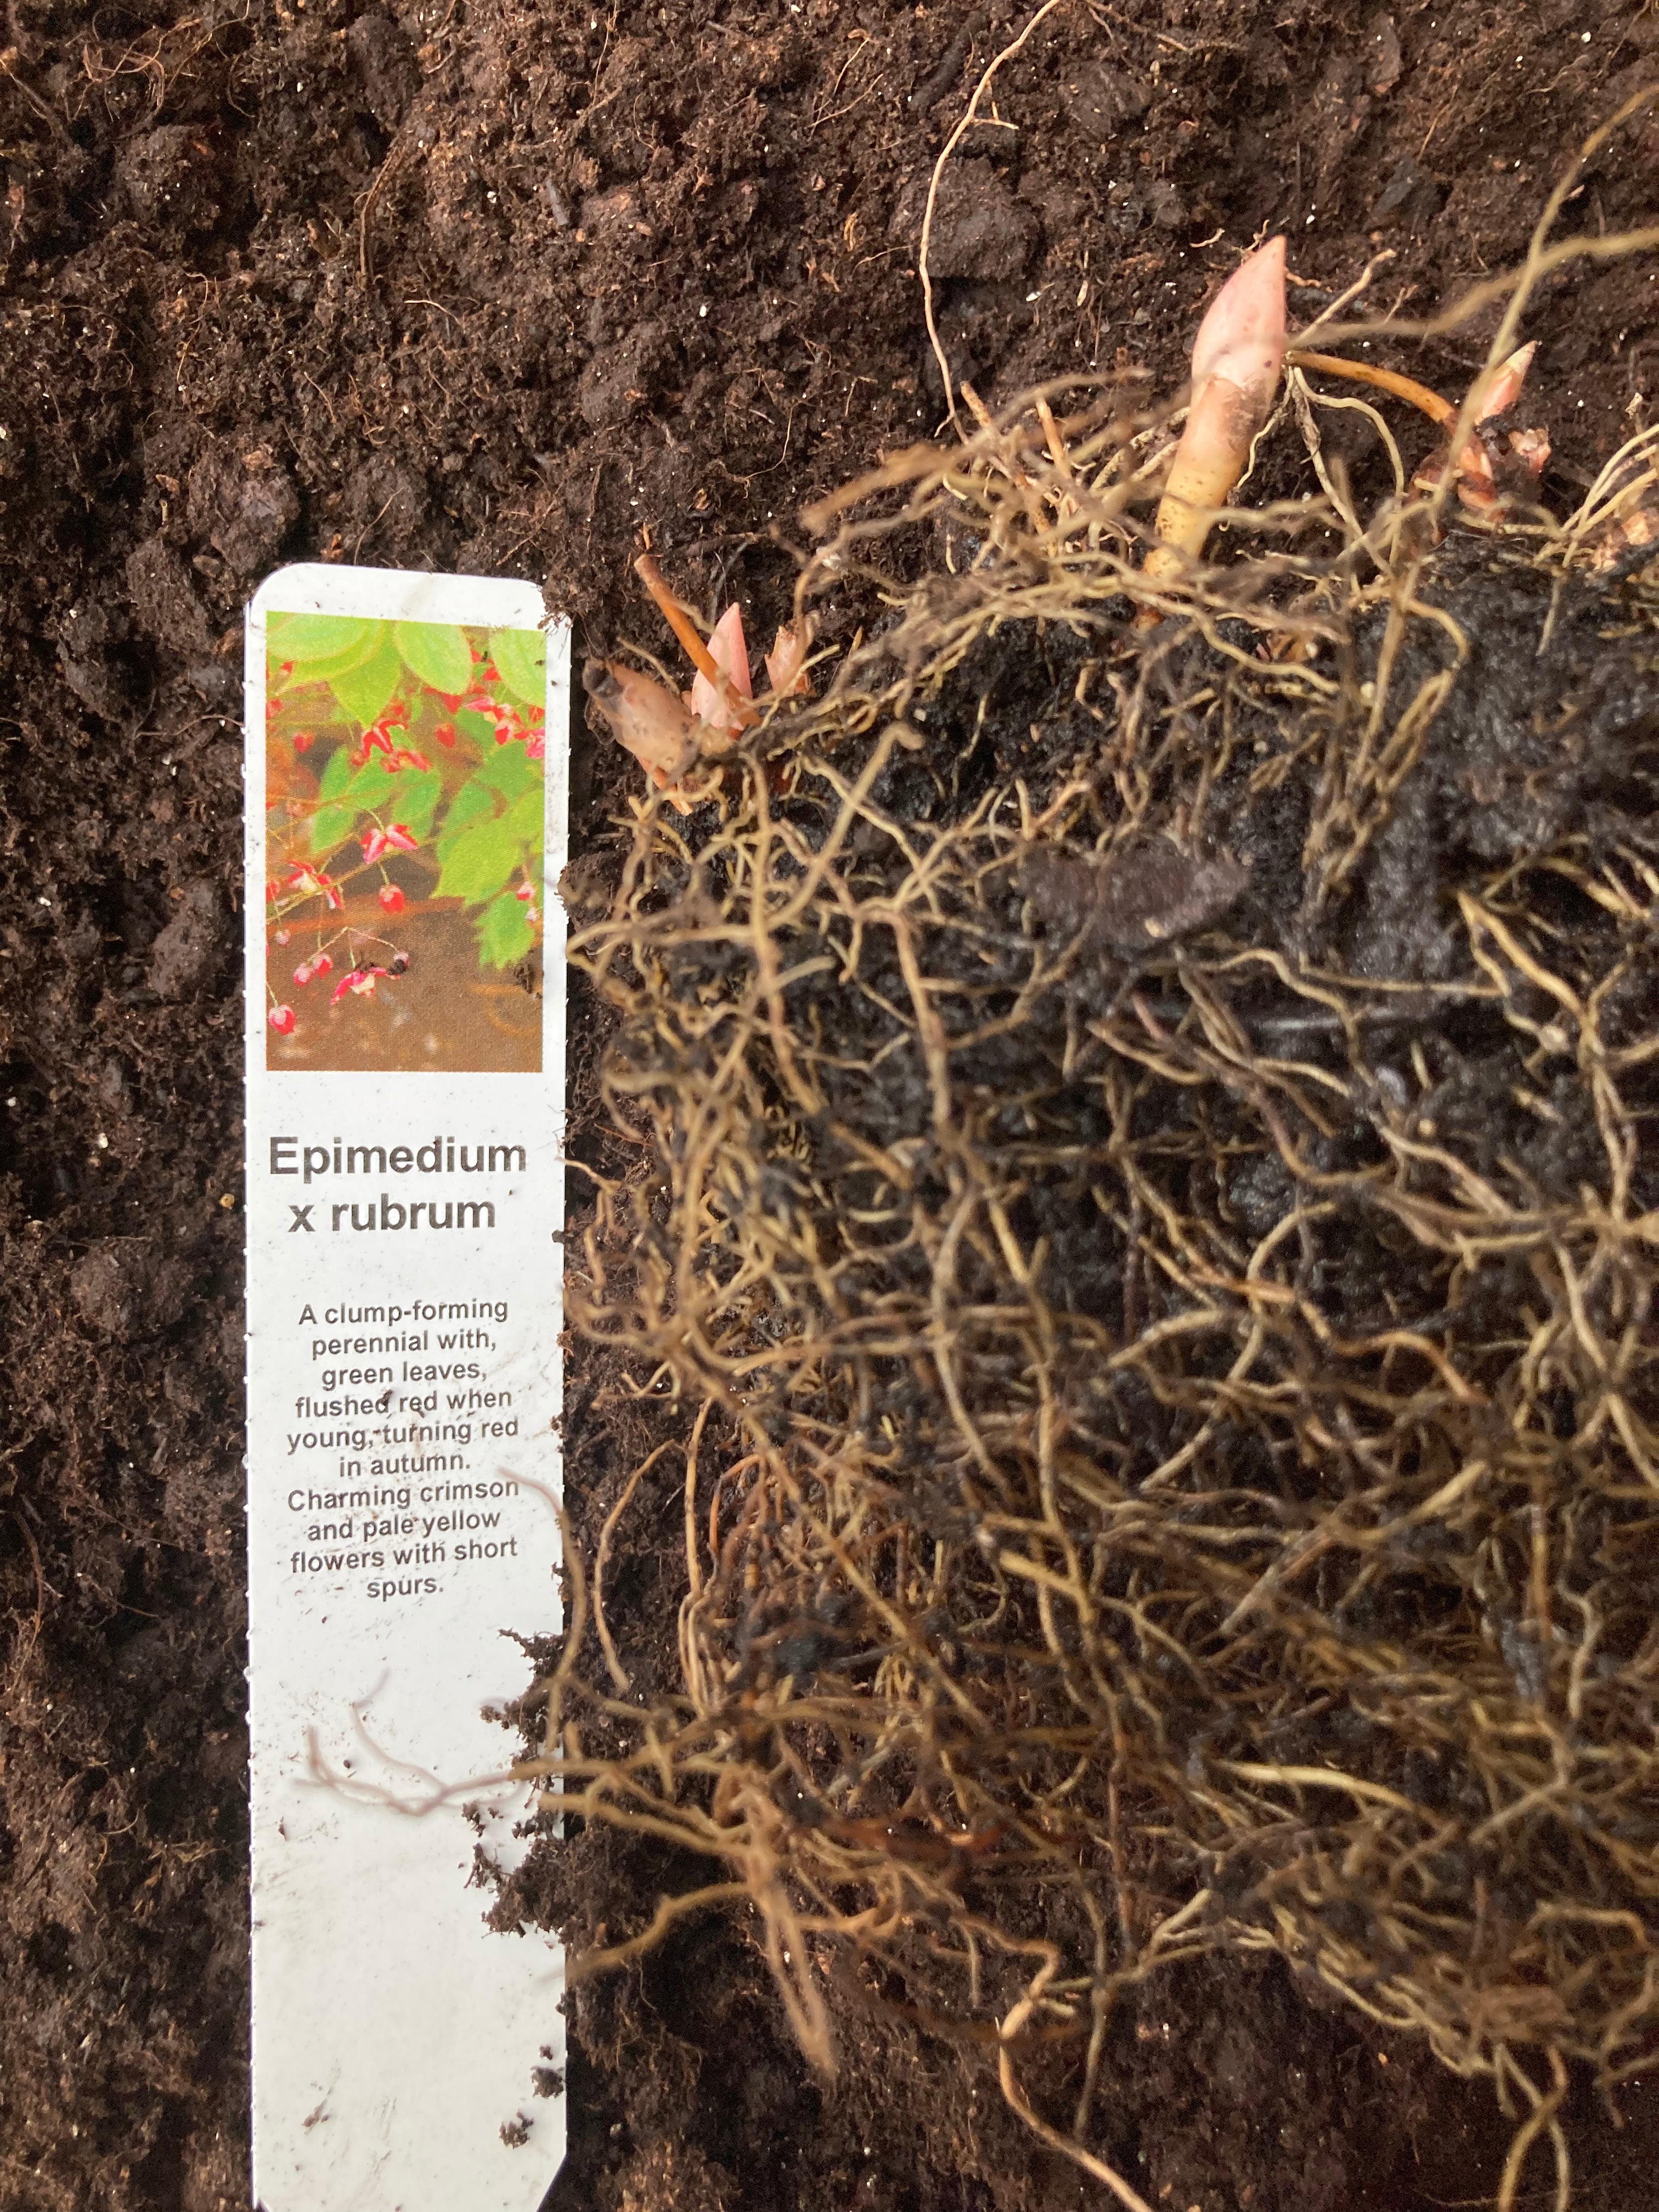 Epimedium x rubrum or Bishop's Mitre or Barrenwort (Budding Section of Bare Root) Free UK Postage